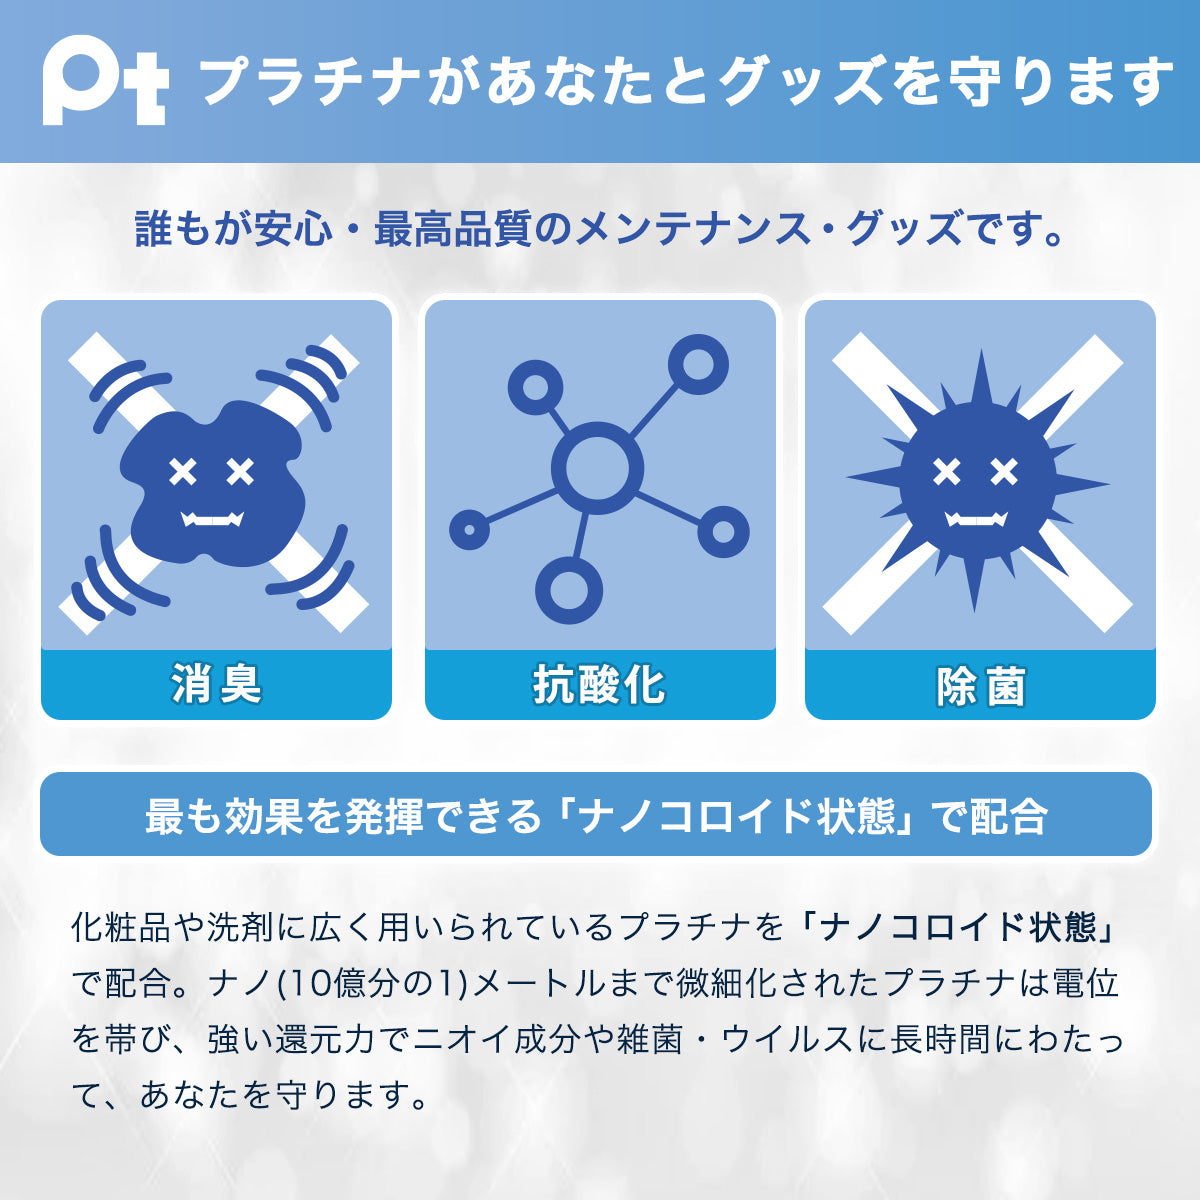 SSI JAPAN Pt Ag+抗菌消臭抗酸化玩具清潔泡泡 80ml